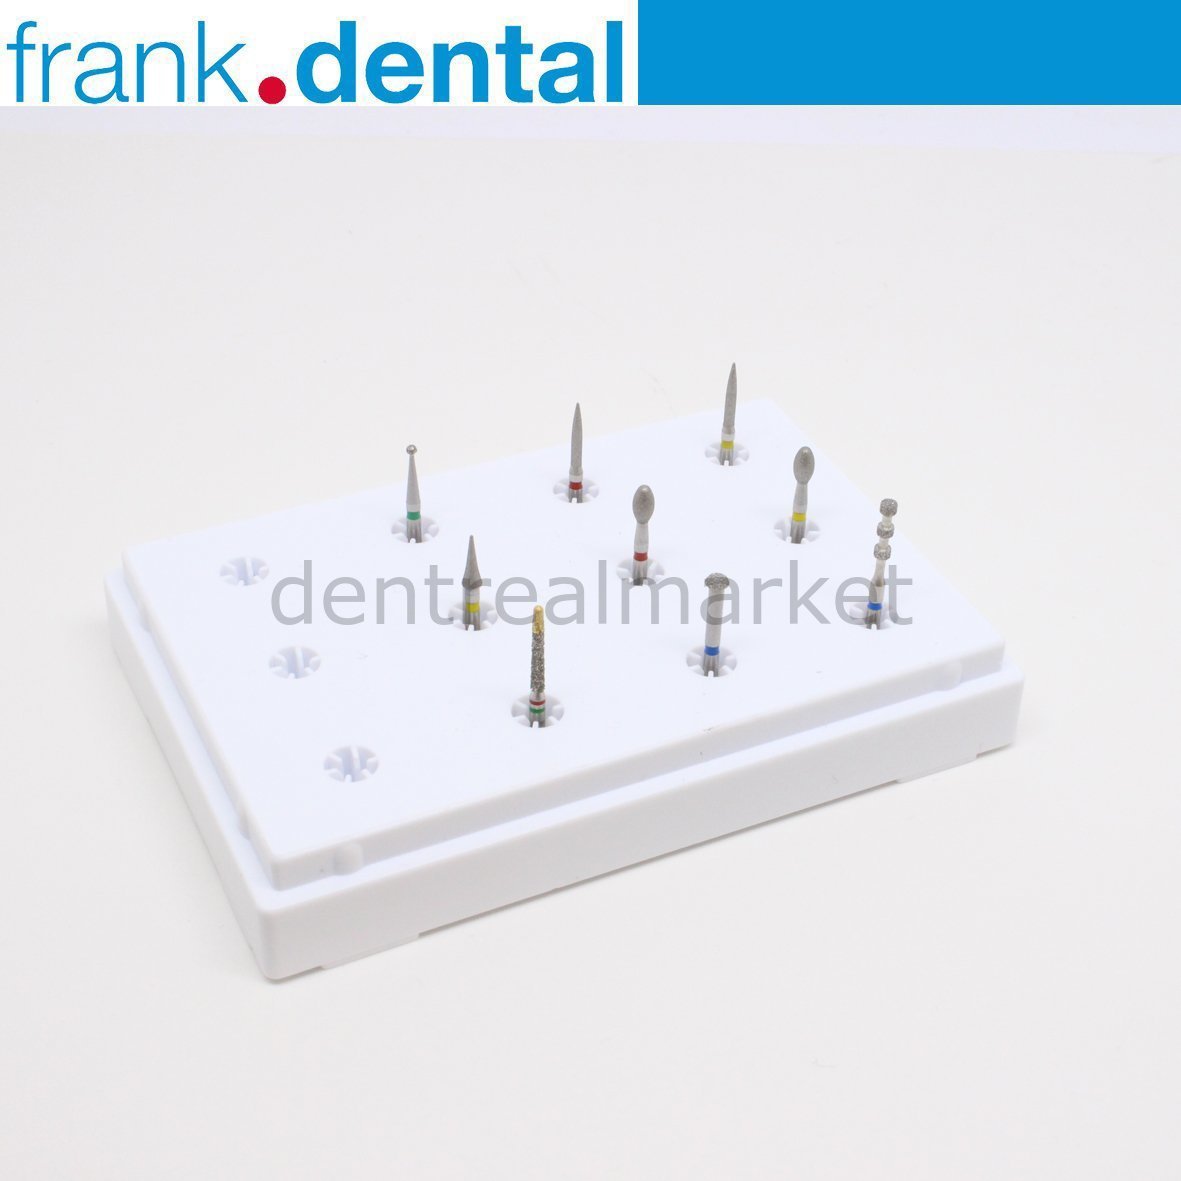 DentrealStore - Frank Dental Laminate Veneer Bur Preparation Set